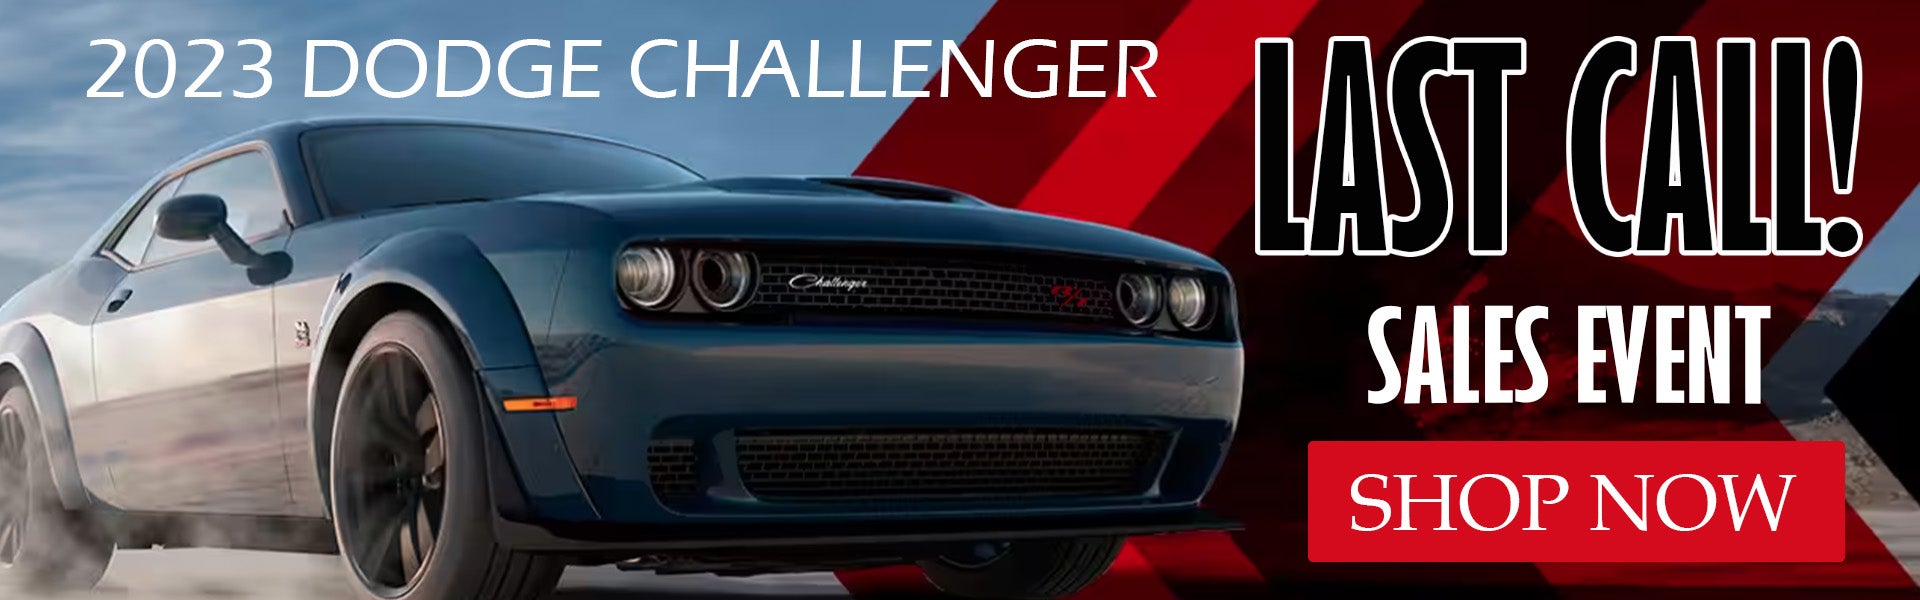 2023 Dodge Challenger Last Call Sales Event